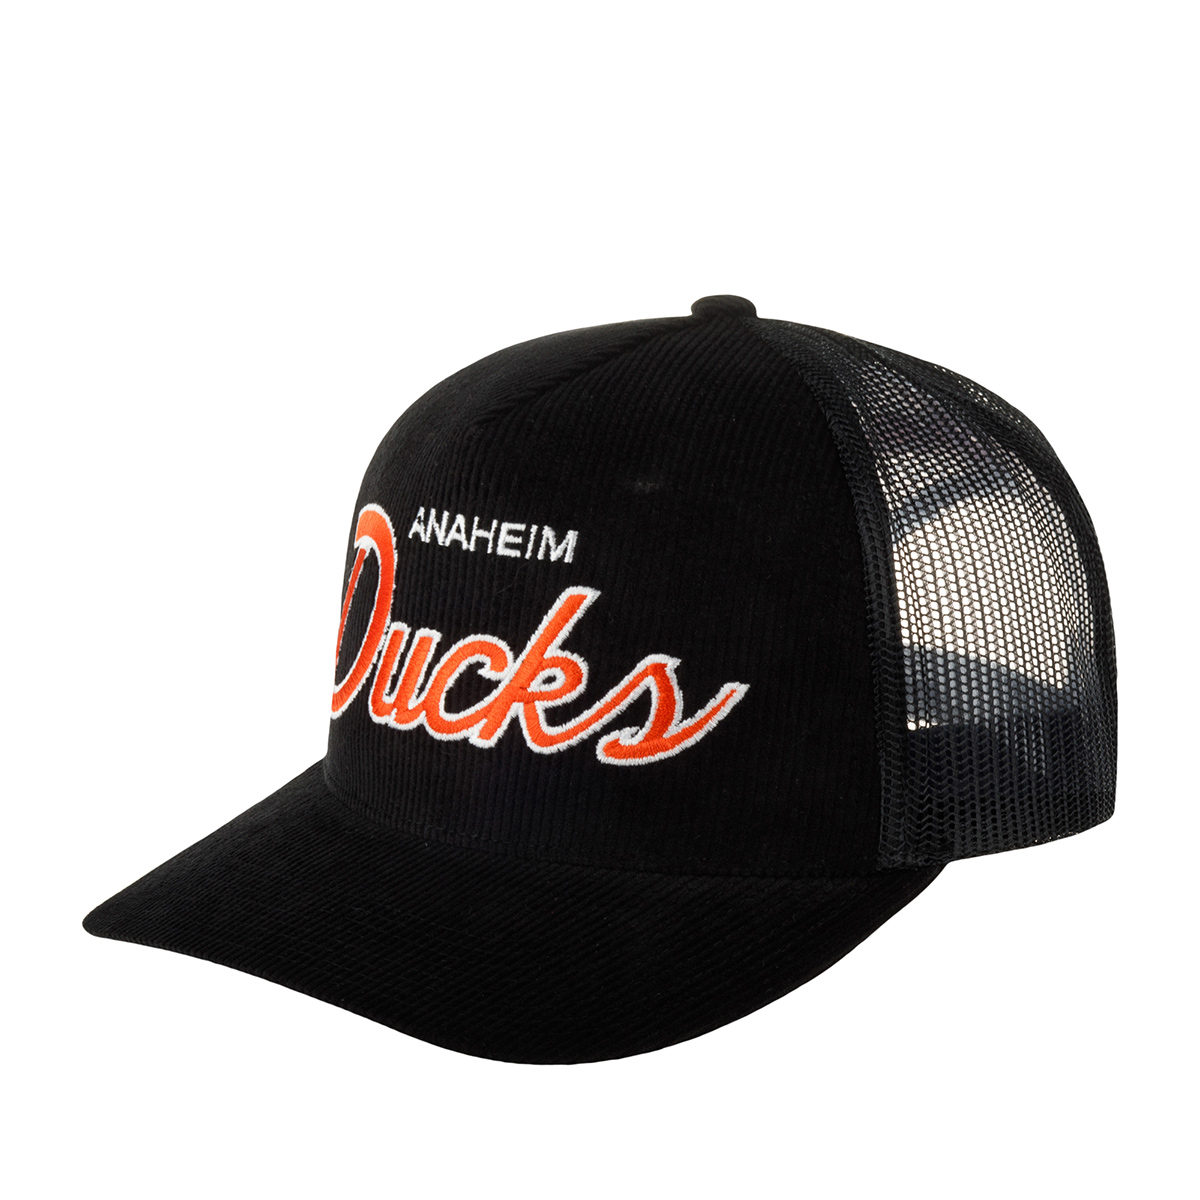 Бейсболка унисекс Mitchell&Ness HHSS6005-ADUYYPPPBLCK Anaheim Ducks NHL черная, one size